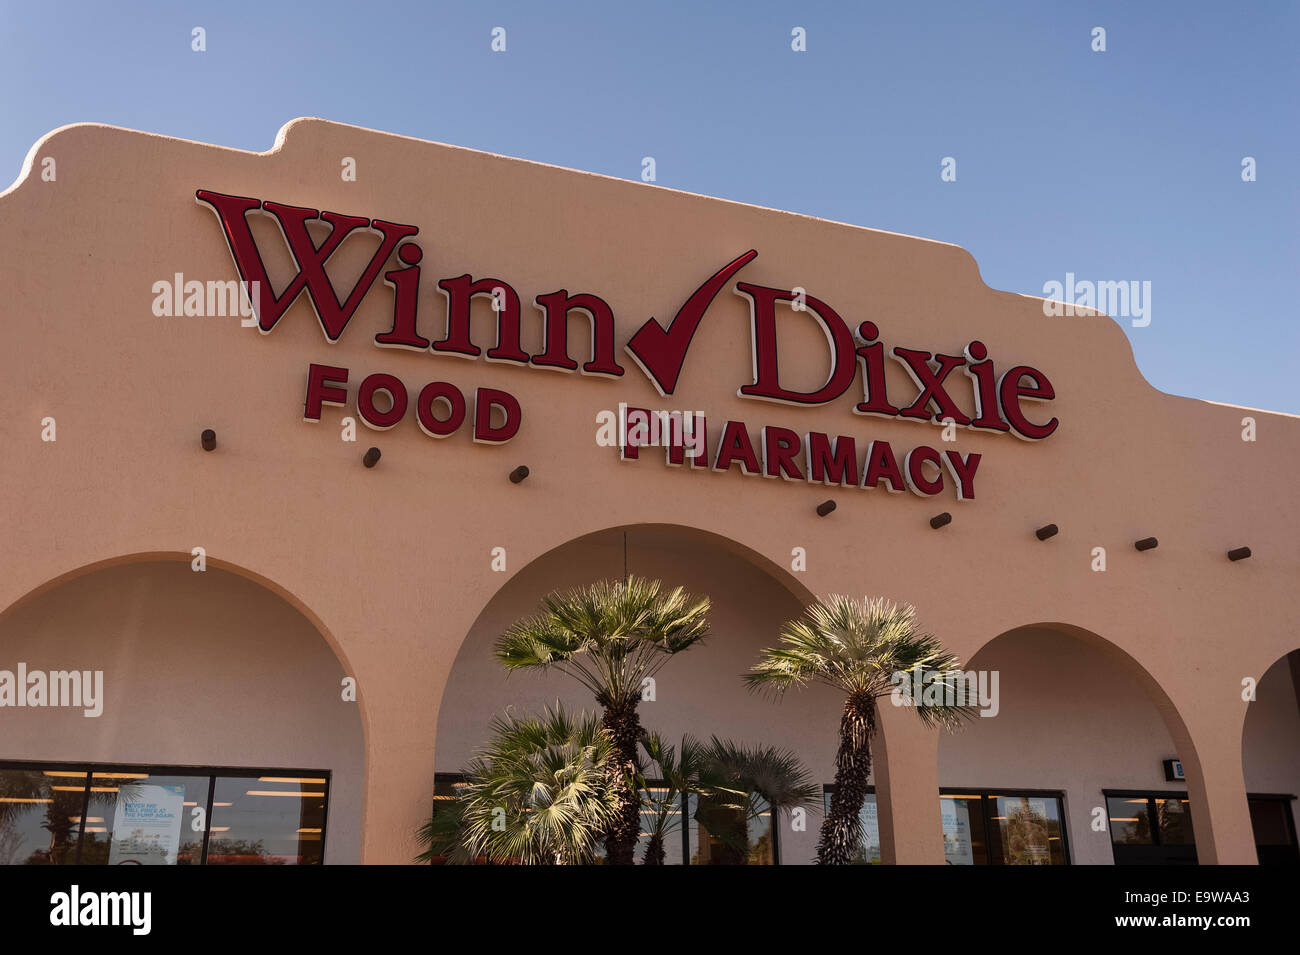 Winn Dixie Food Supermarket located in Lady Lake, Florida USA Stock Photo